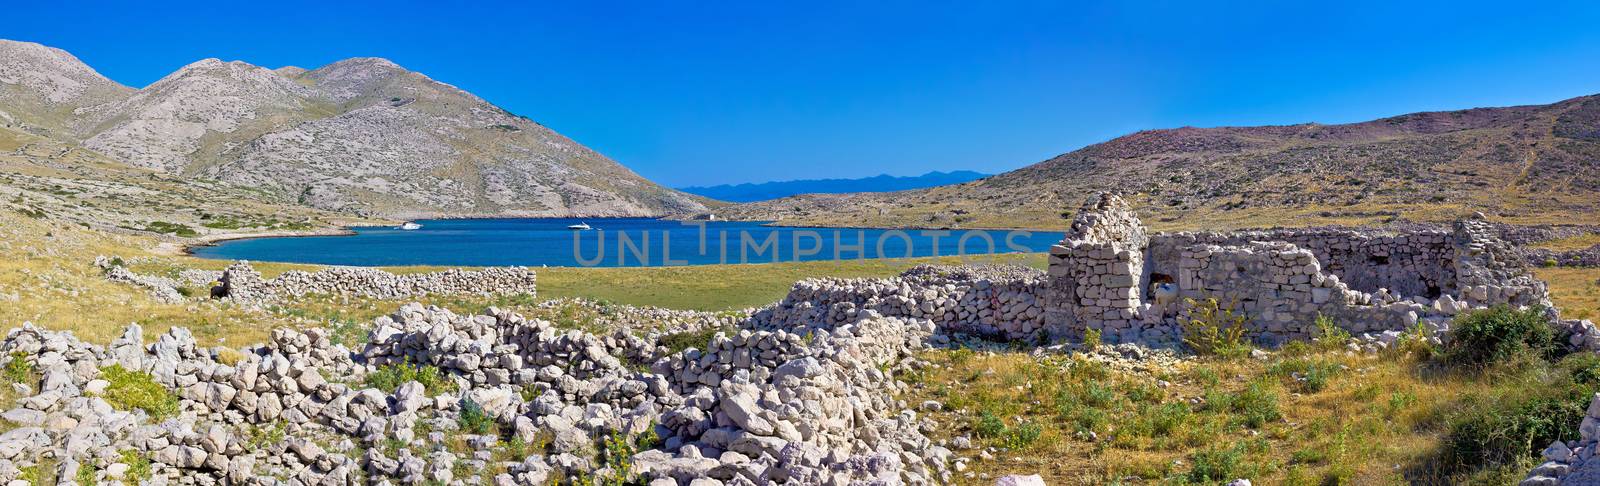 Island of Krk yachting bay panorama with historic stone ruins, Mala luka, Croatia